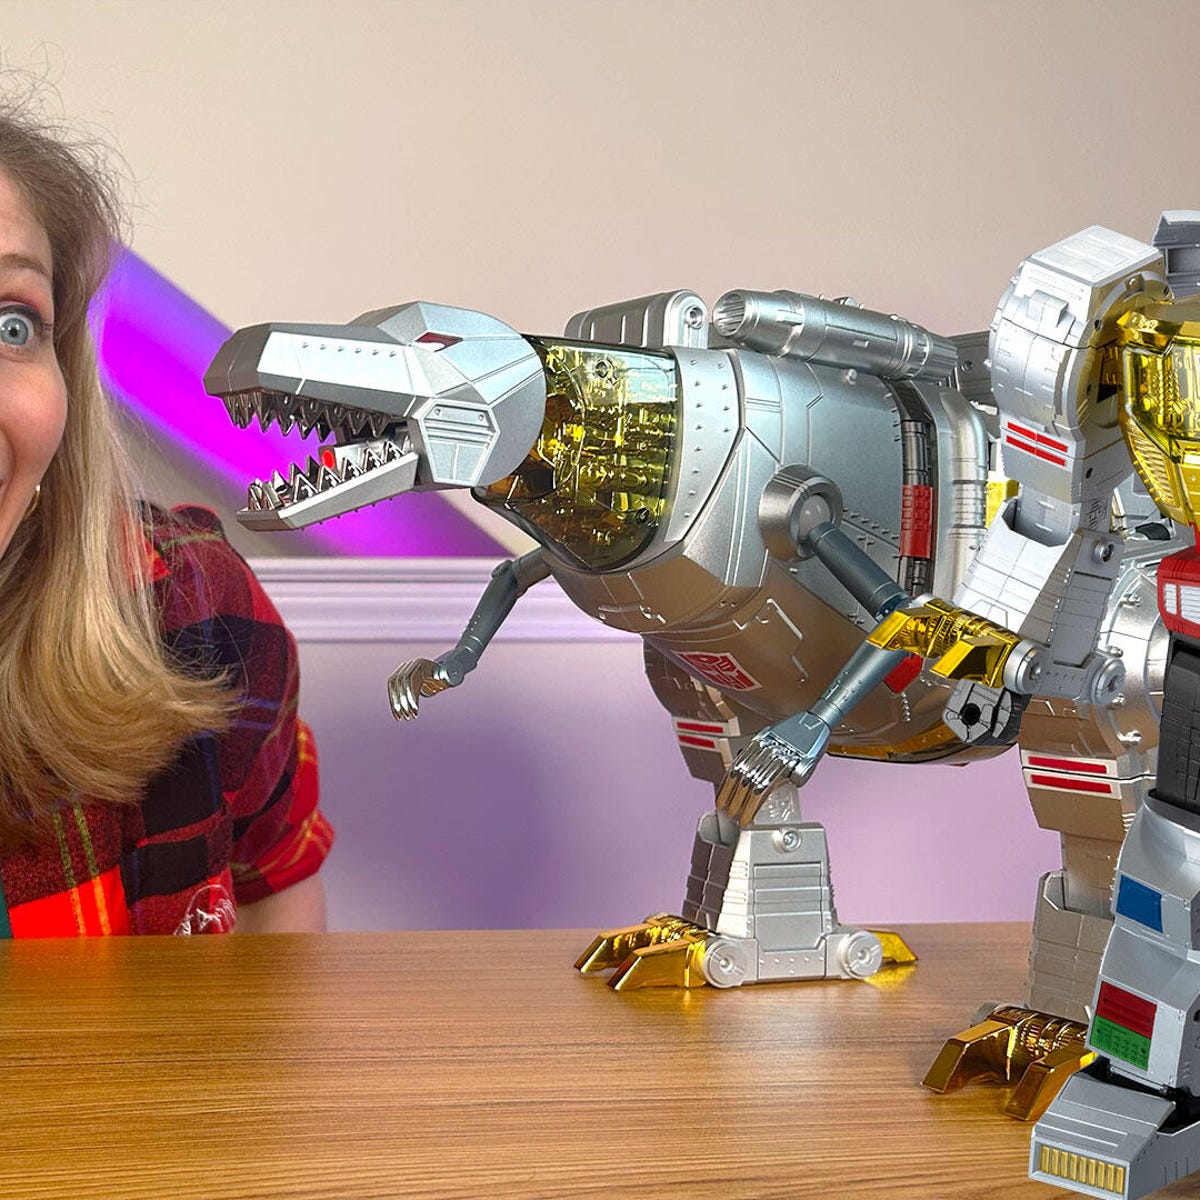 A Robot That Bites: Transformers T-Rex With Voice Commands - CNET